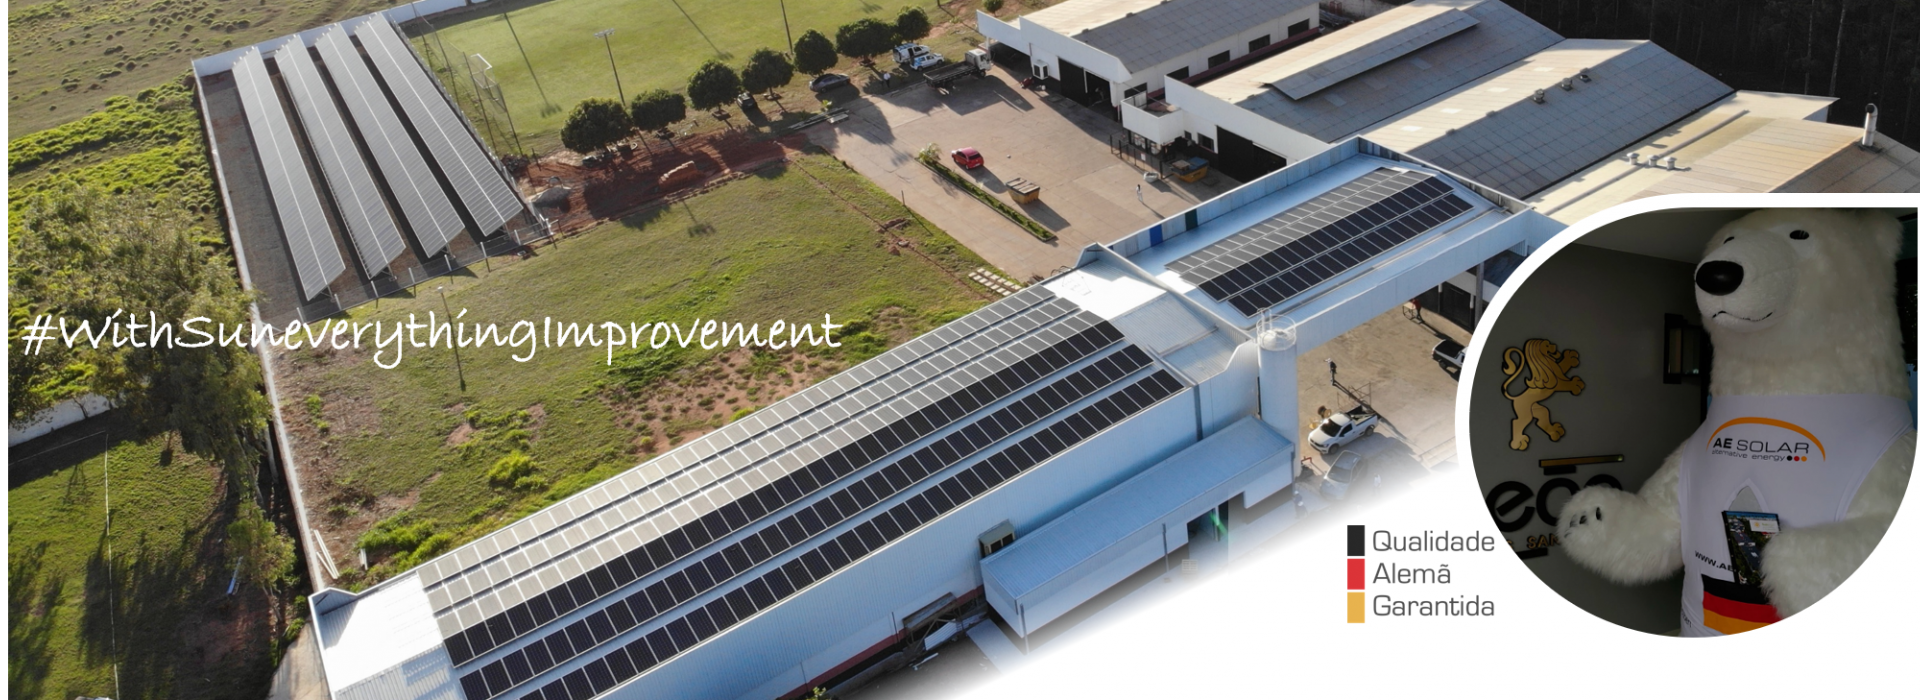 photovoltaic solar plant 